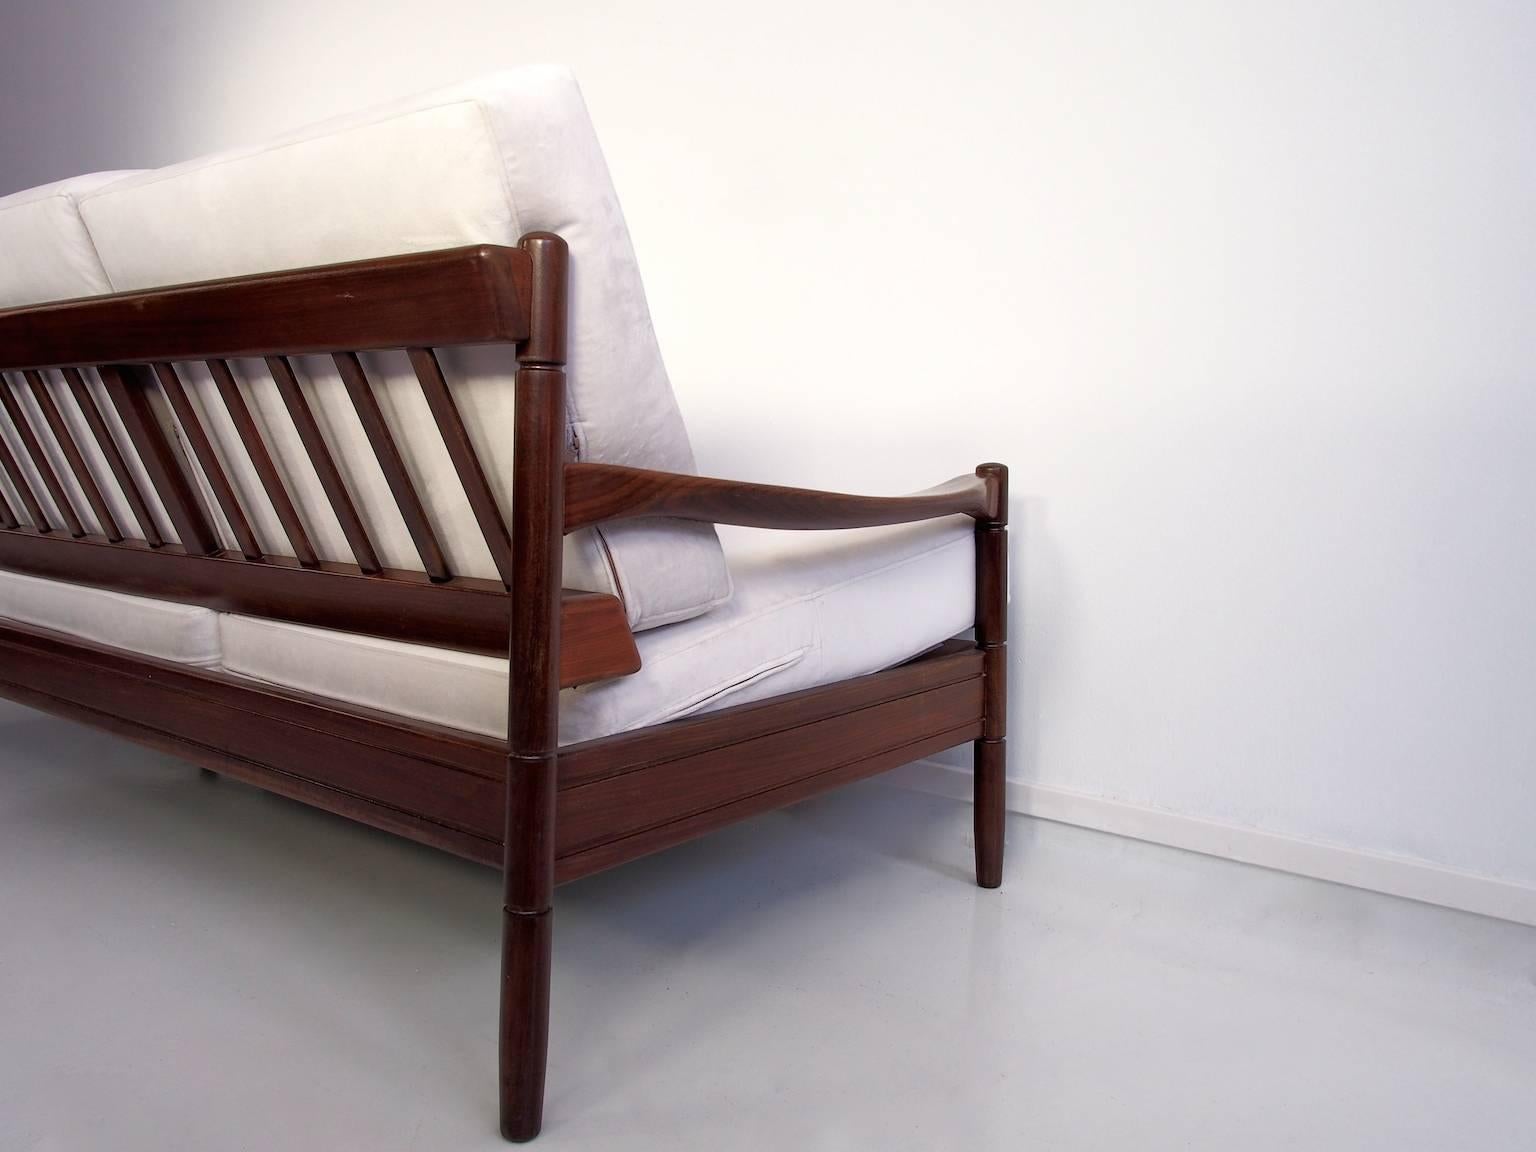 Danish Scandinavian Modern Style Three-Seat White Sofa with Wooden Frame